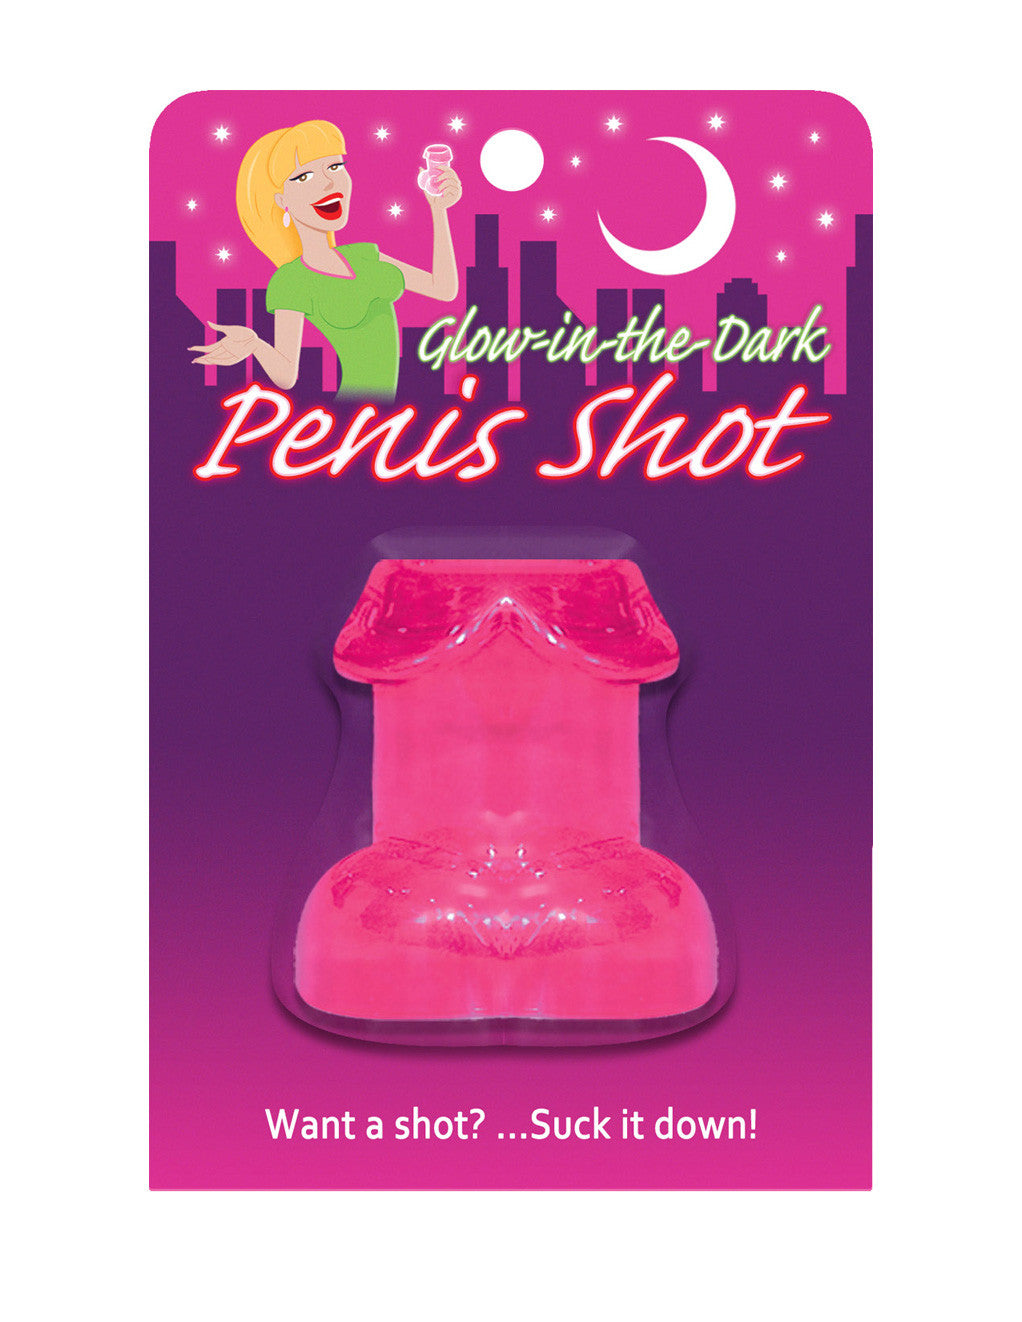 https://cdn.shopify.com/s/files/1/1221/0120/products/NV.E23-Glow-in-the-Dark-Penis-Shot-_Pink.jpg?v=1581032114